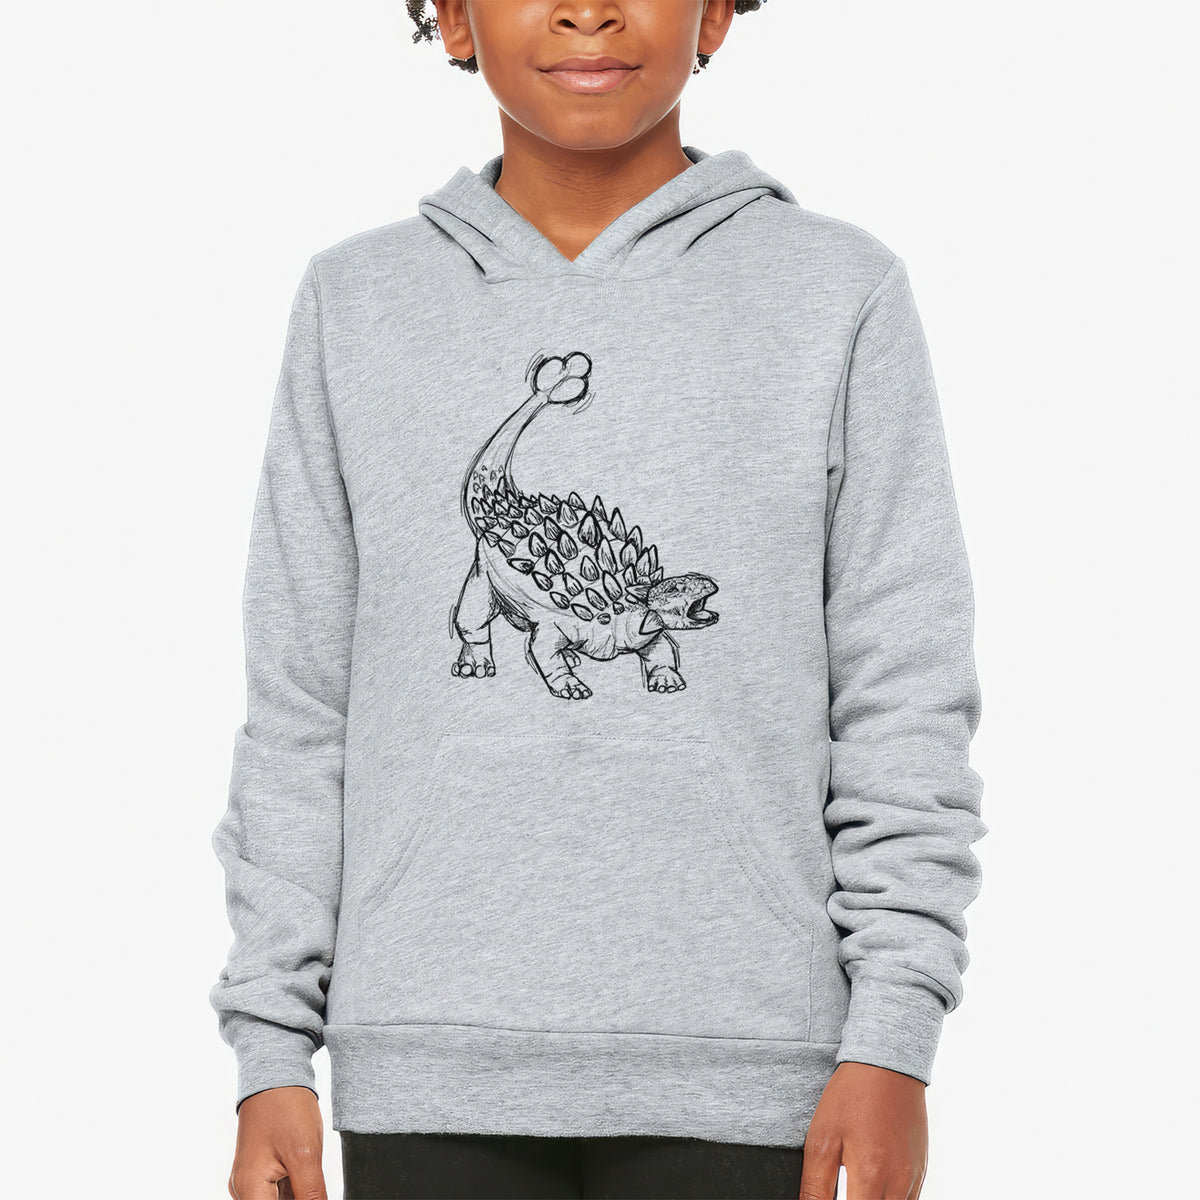 Ankylosaurus Magniventris - Youth Hoodie Sweatshirt